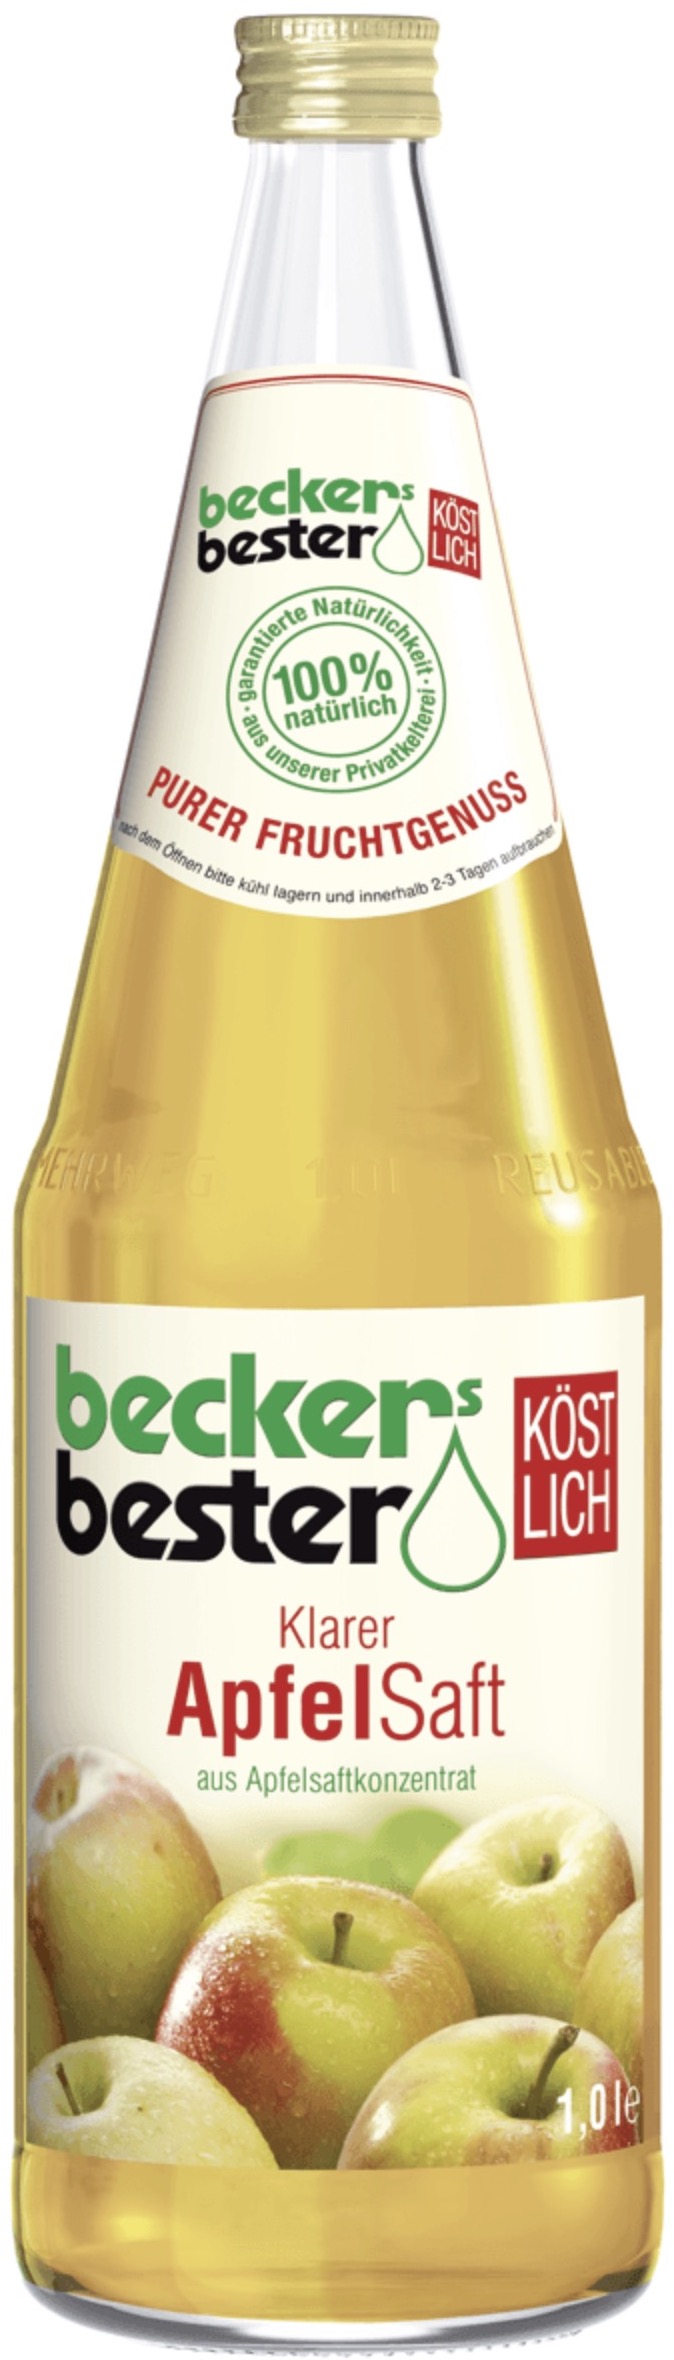 becker's bester Apfelsaft klar 1,0L MEHRWEG